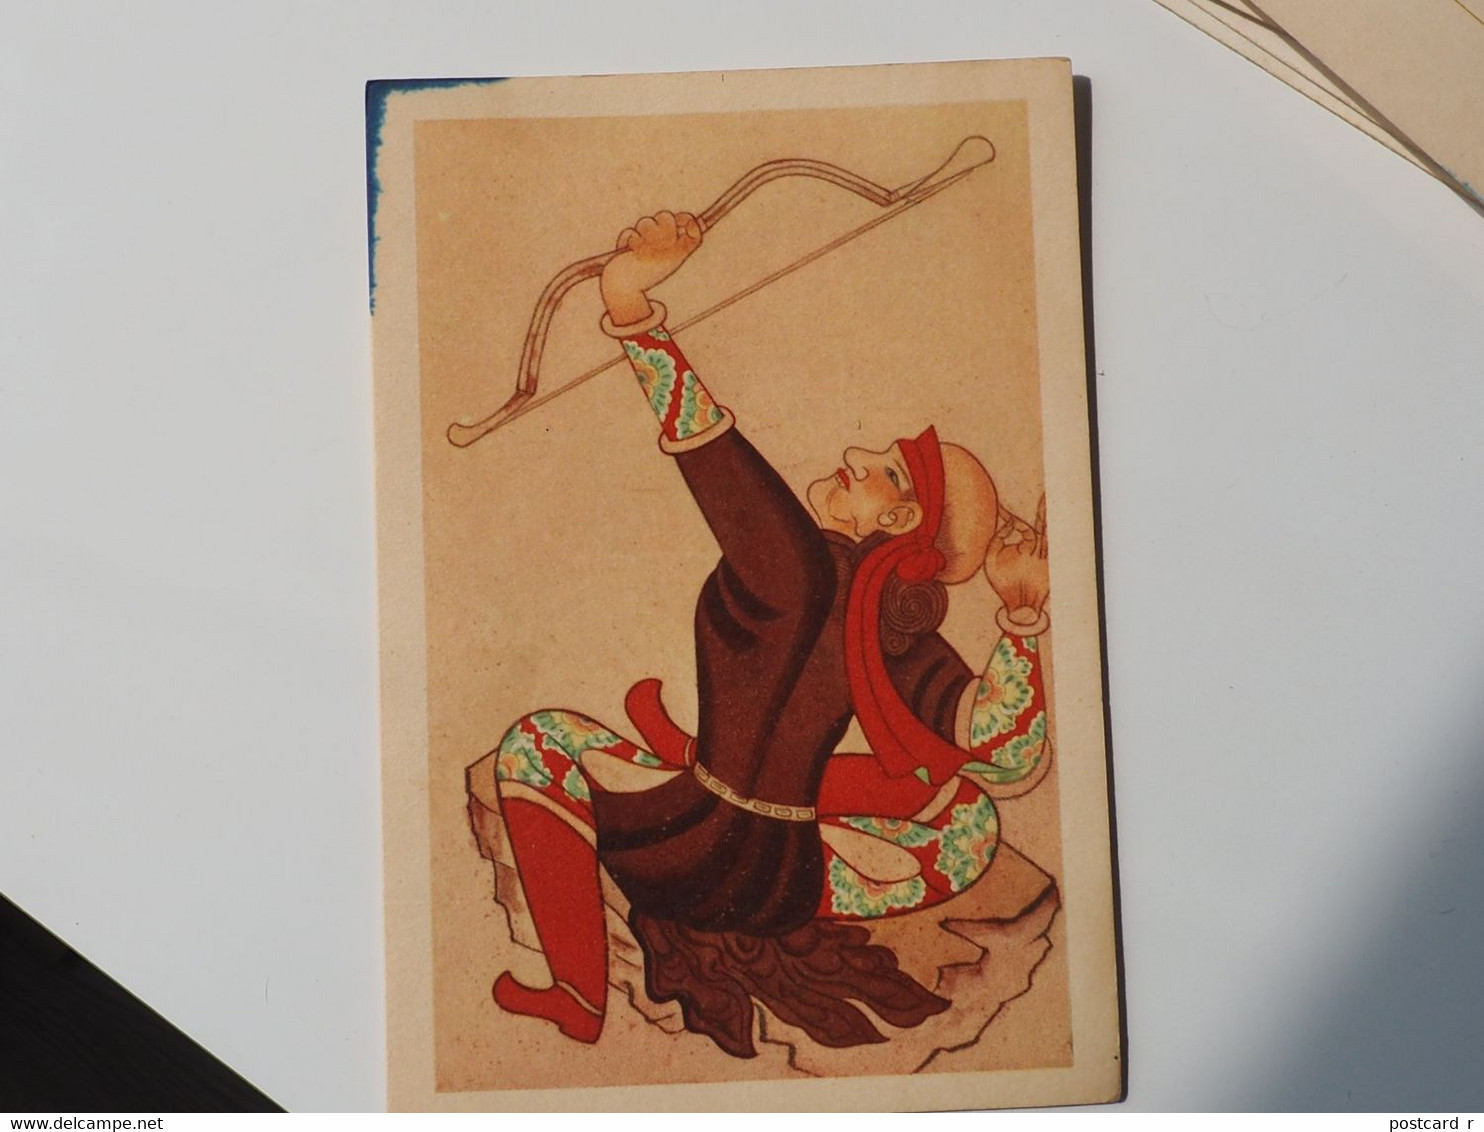 China Postcard Printed In USSR   A 218 - China